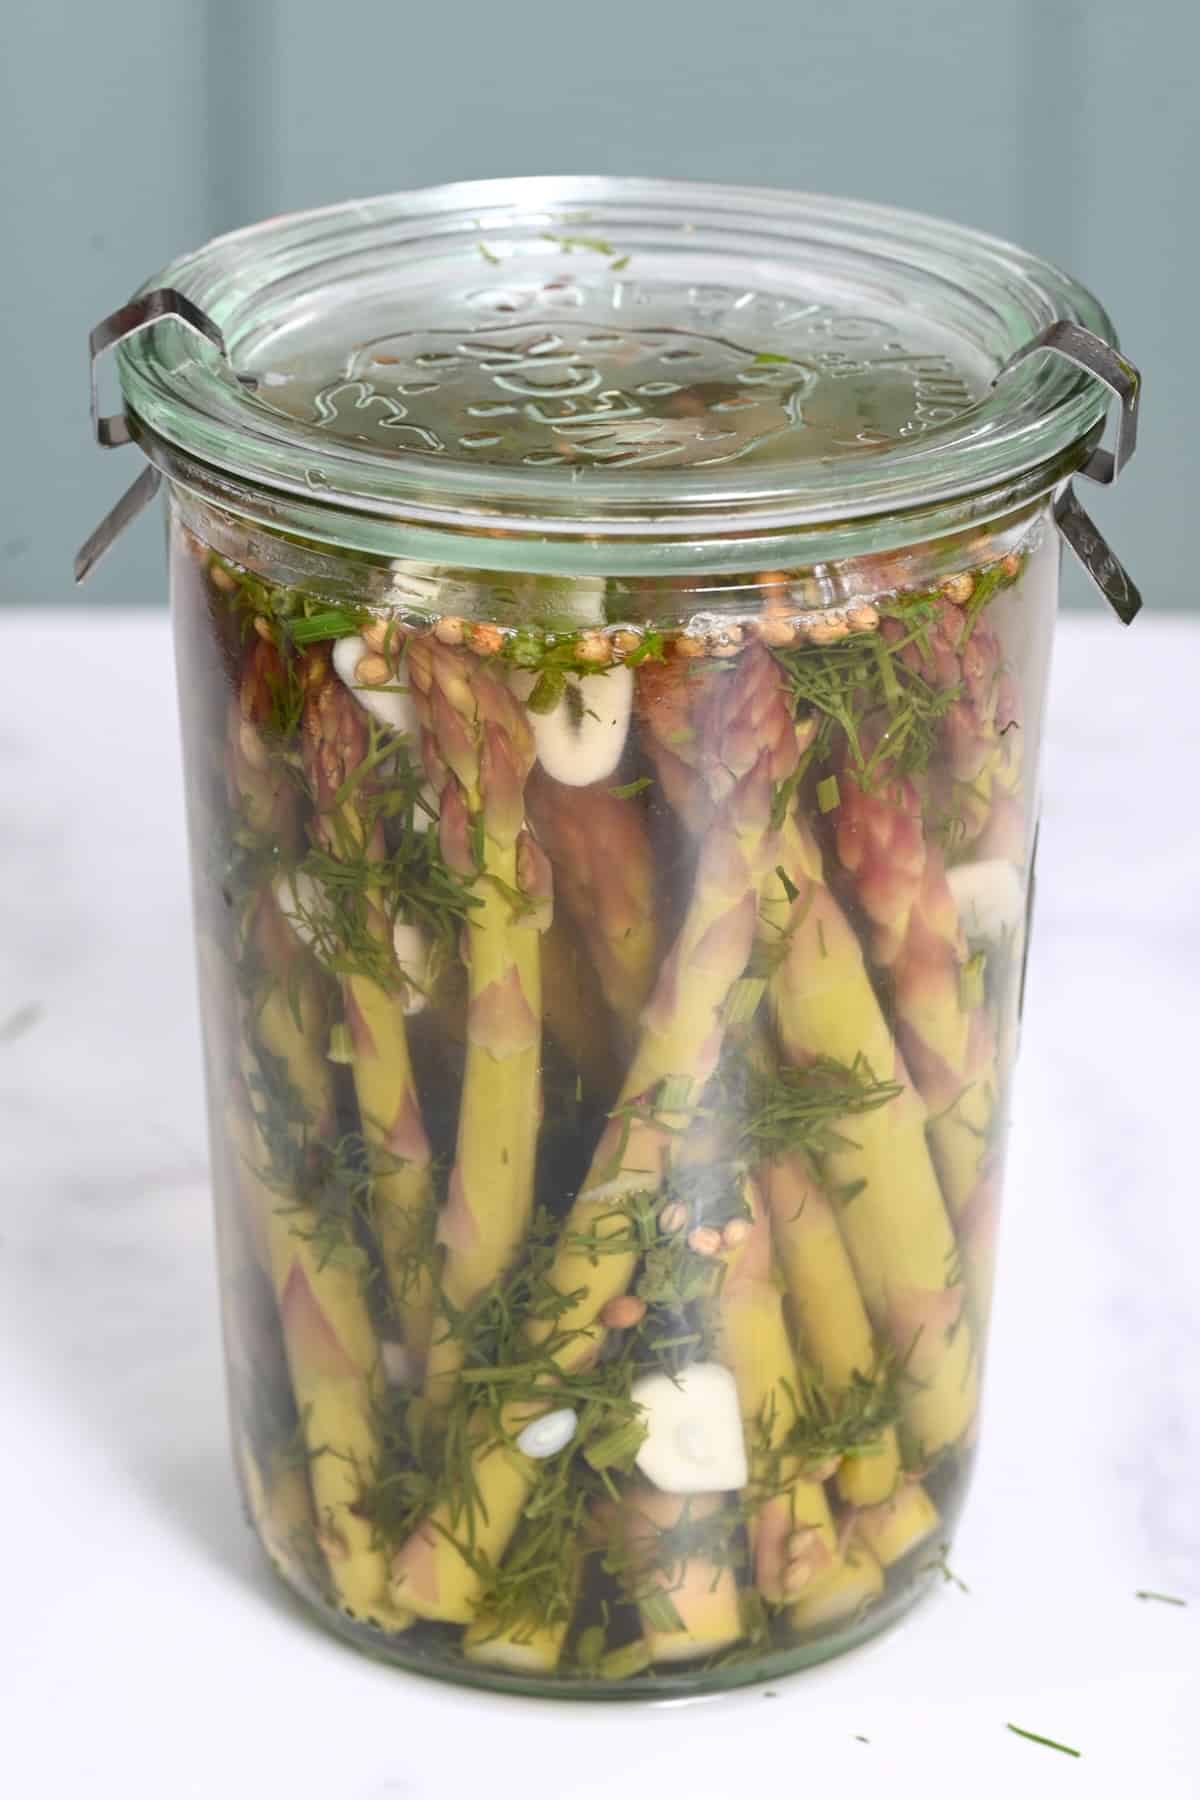 A jar with asparagus pickles